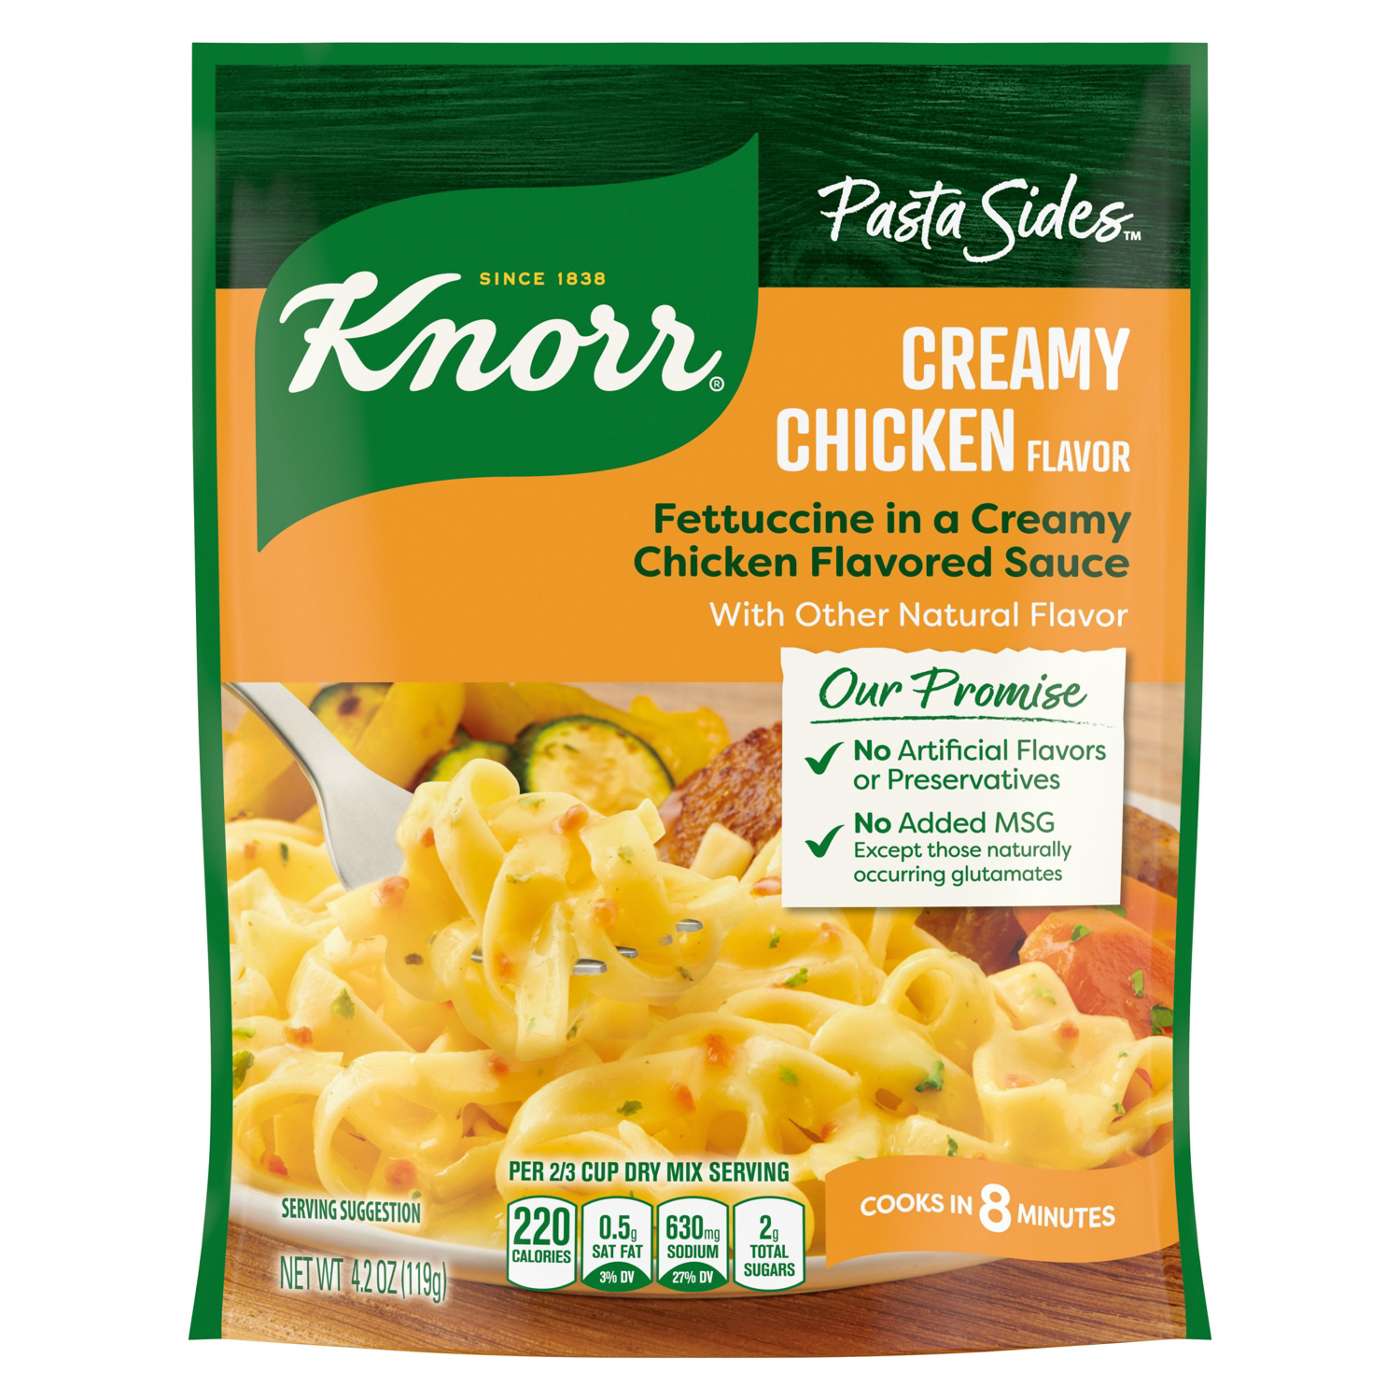 Knorr Pasta Sides Creamy Chicken; image 1 of 4